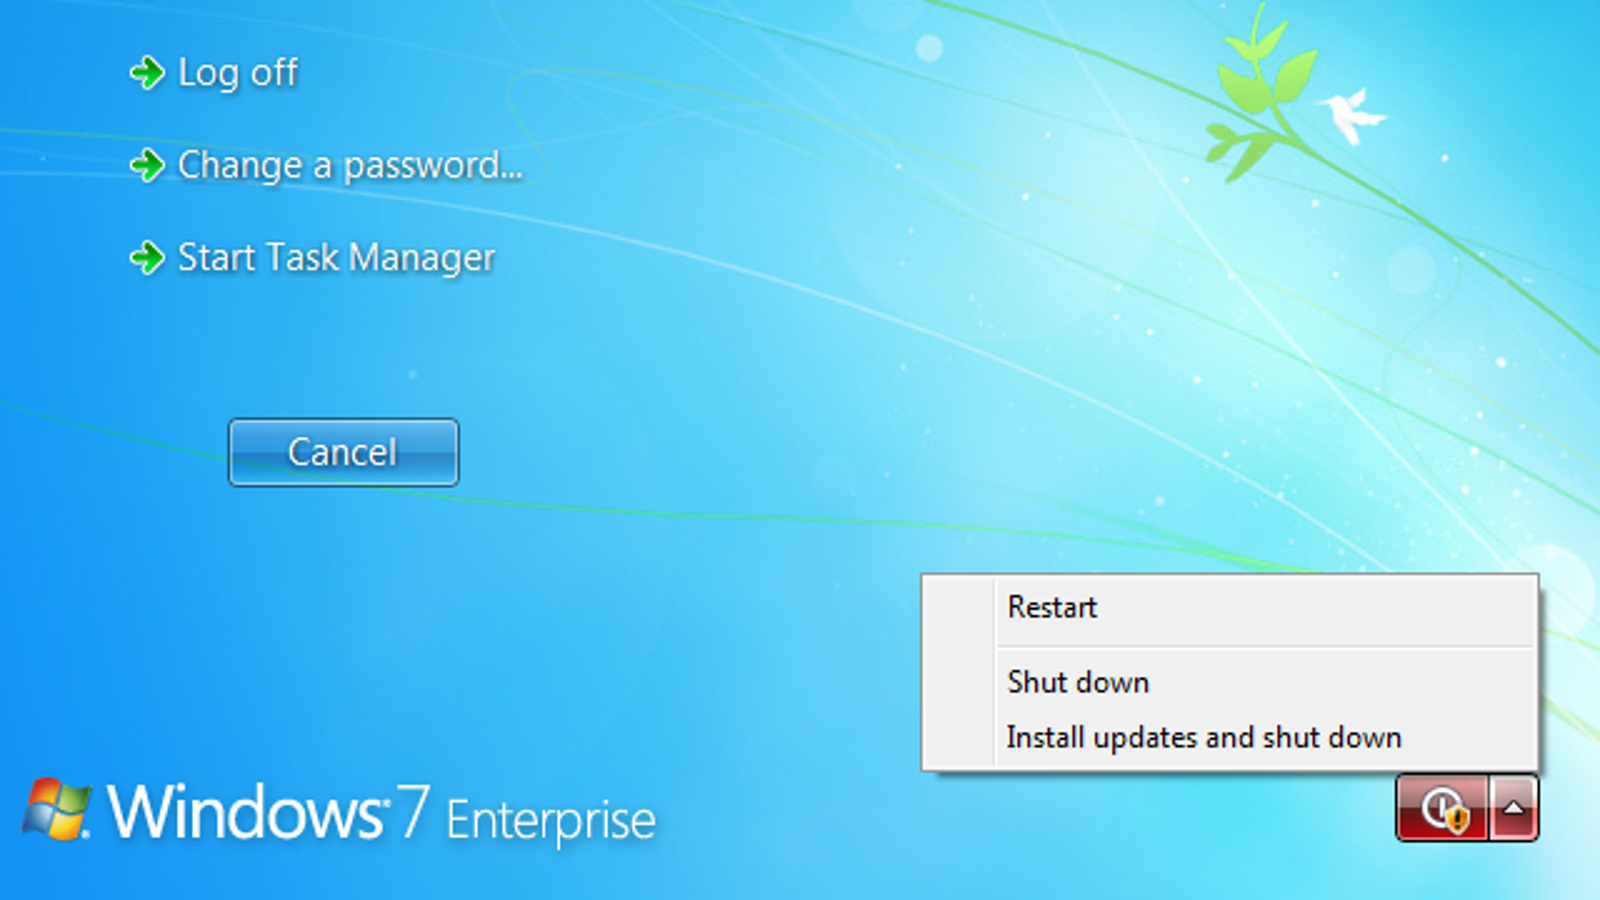 Start password. Windows 7 shutting down. Power off shutting down. Shutdown for update in 1 hour.